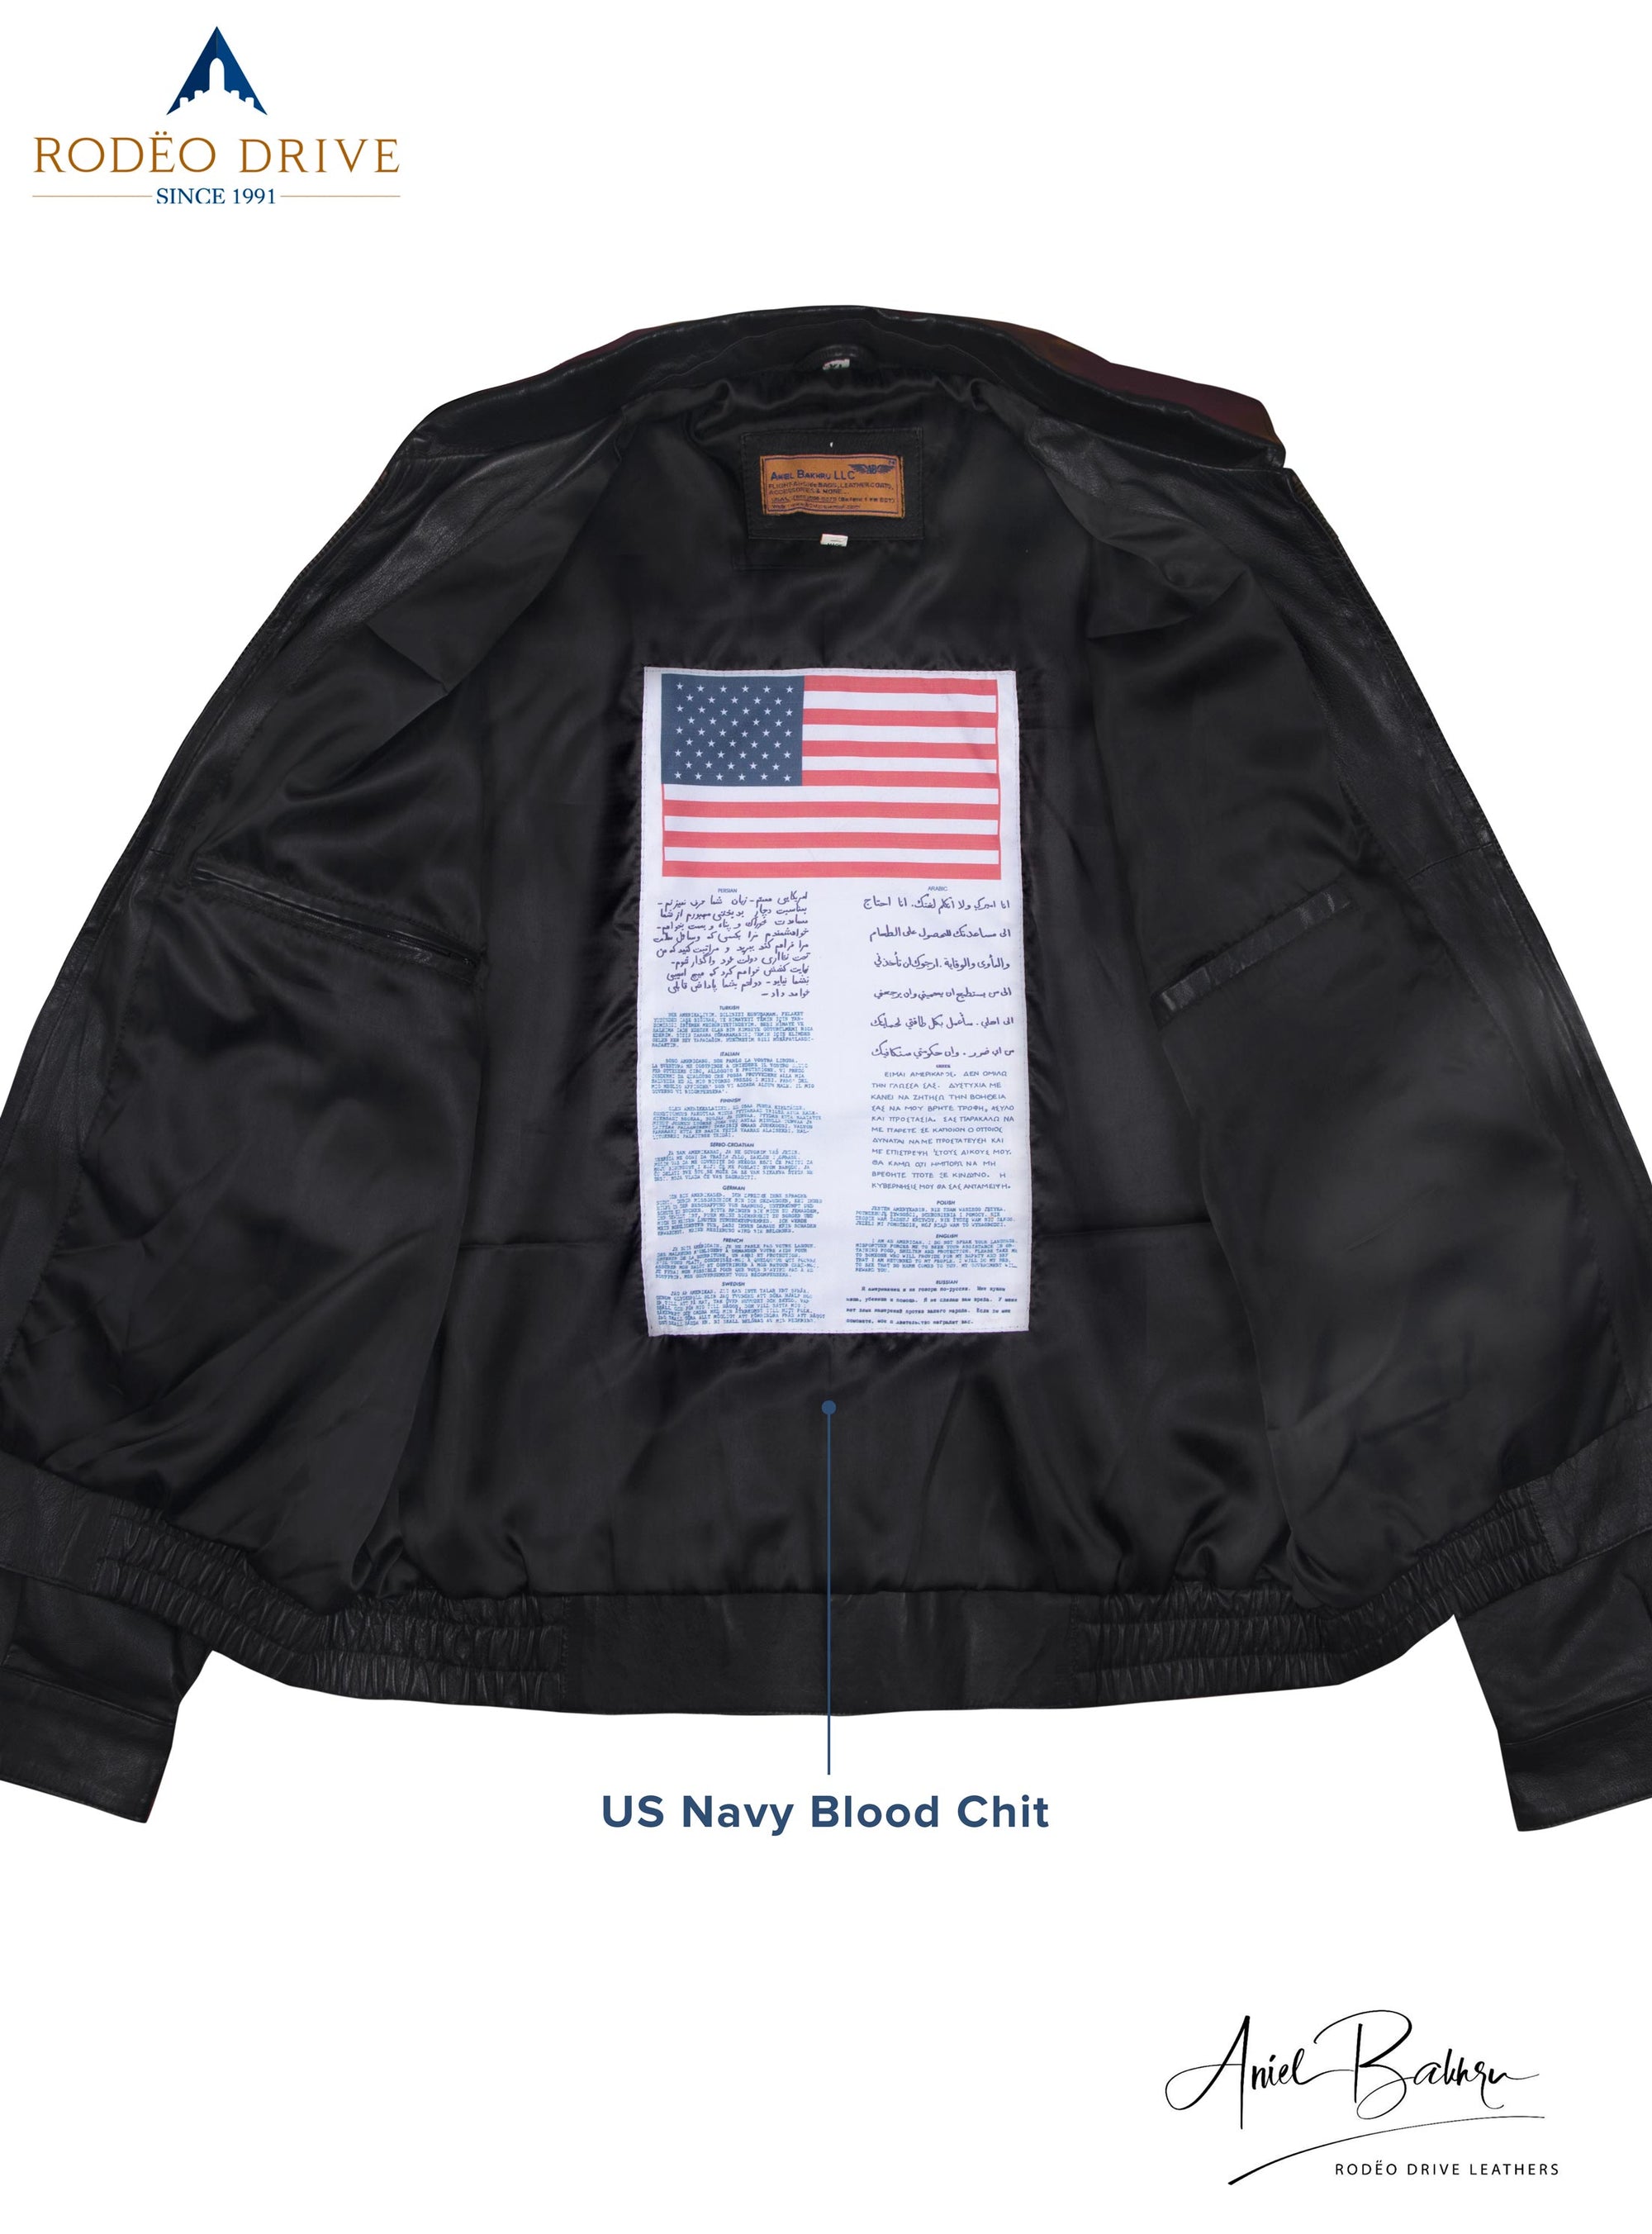 inside image of Bomber jacket. US navy Blood chit is sewed inside.